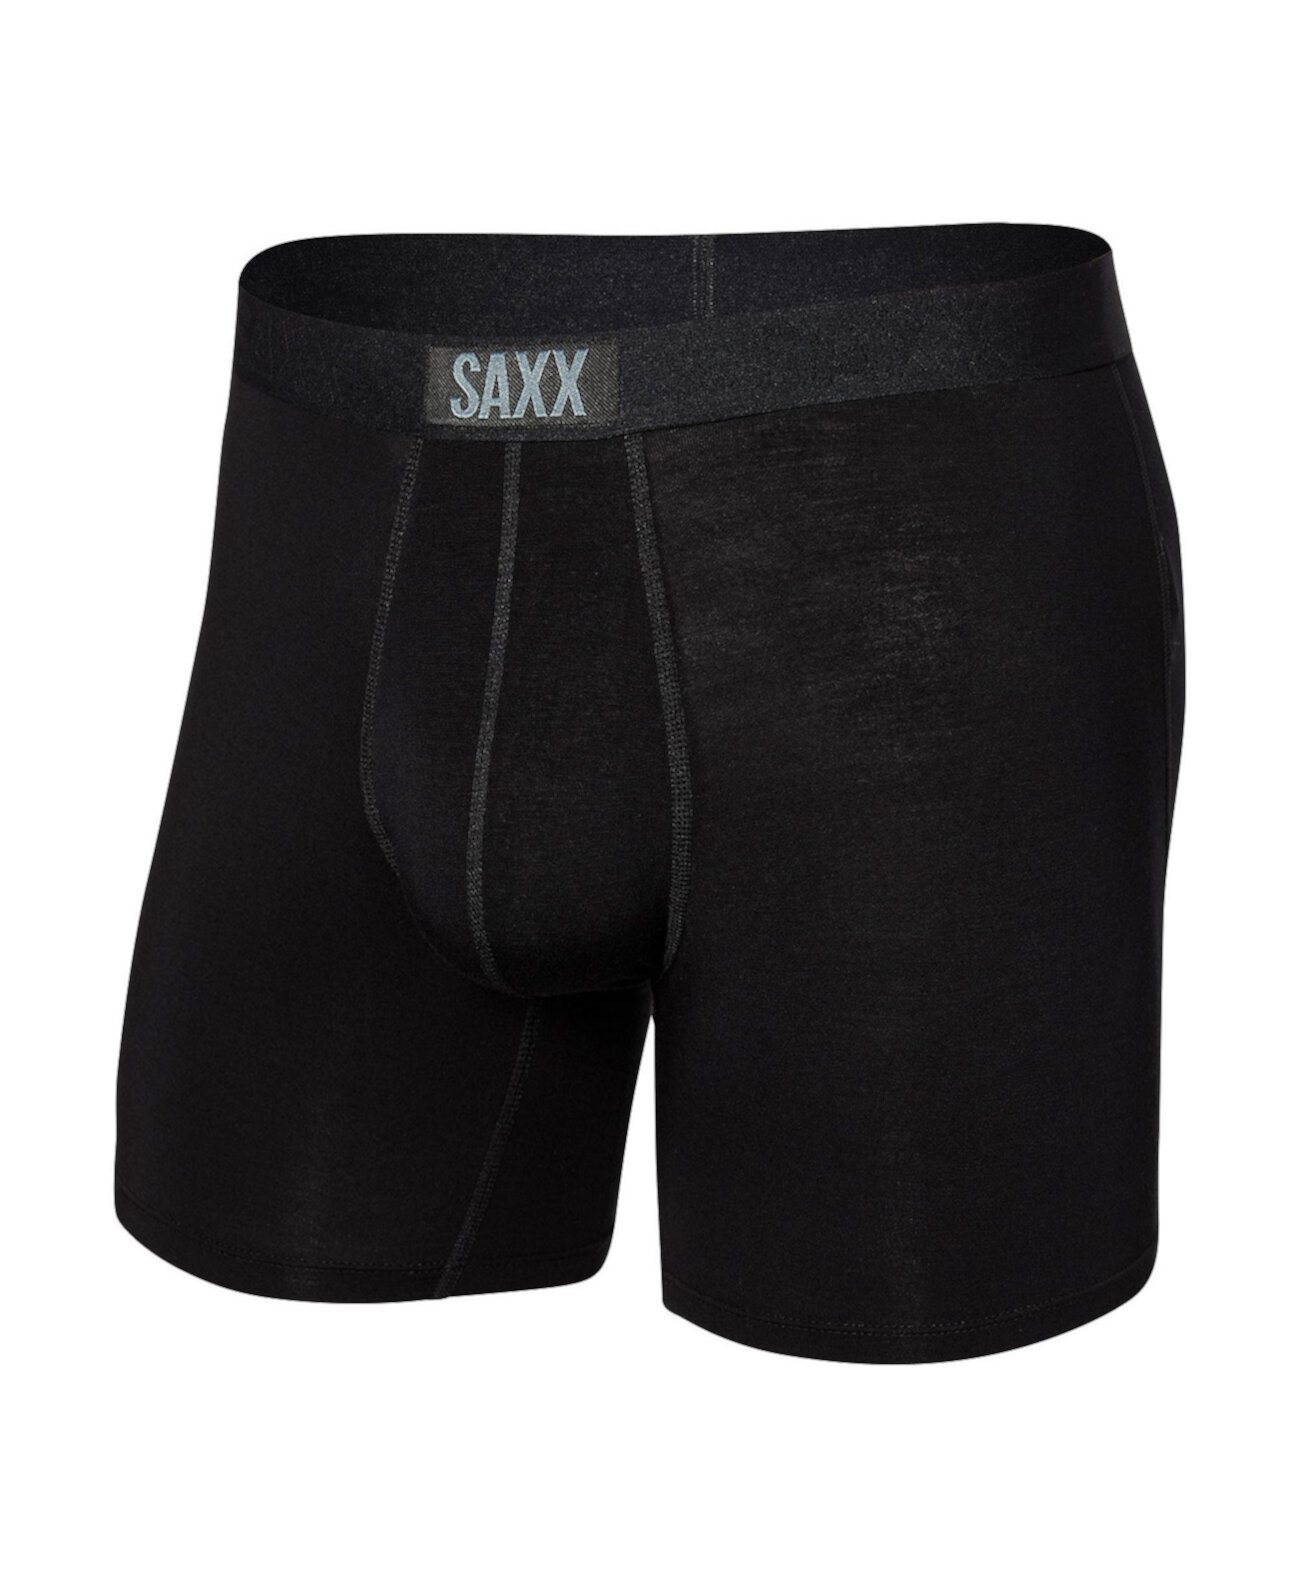 Мужские трусы-боксеры Vibe Super Soft SAXX